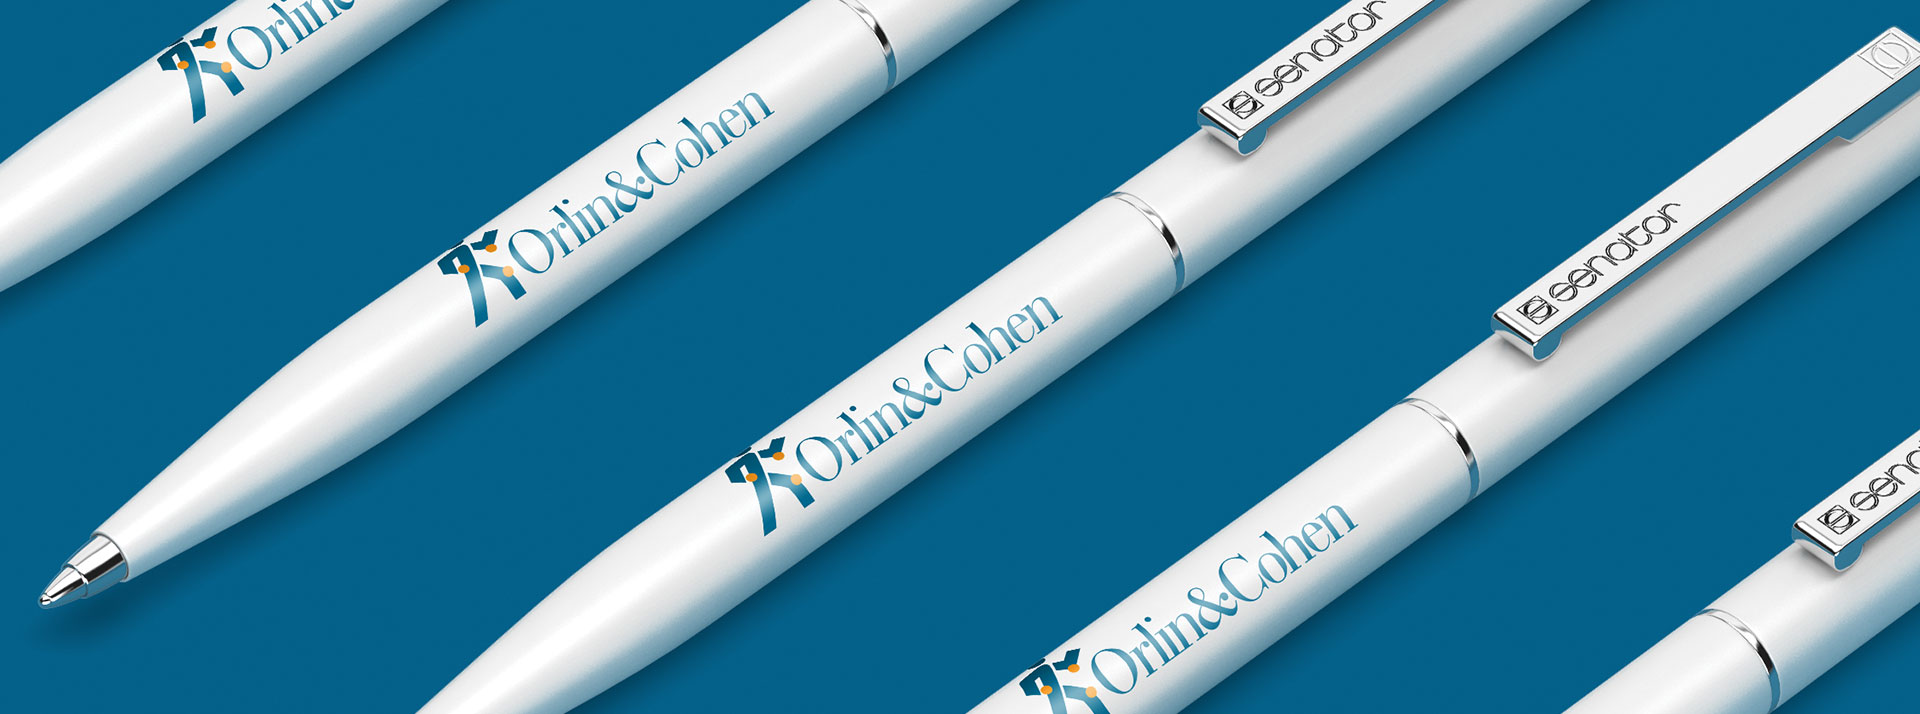 Orlin & Cohen logo on pens